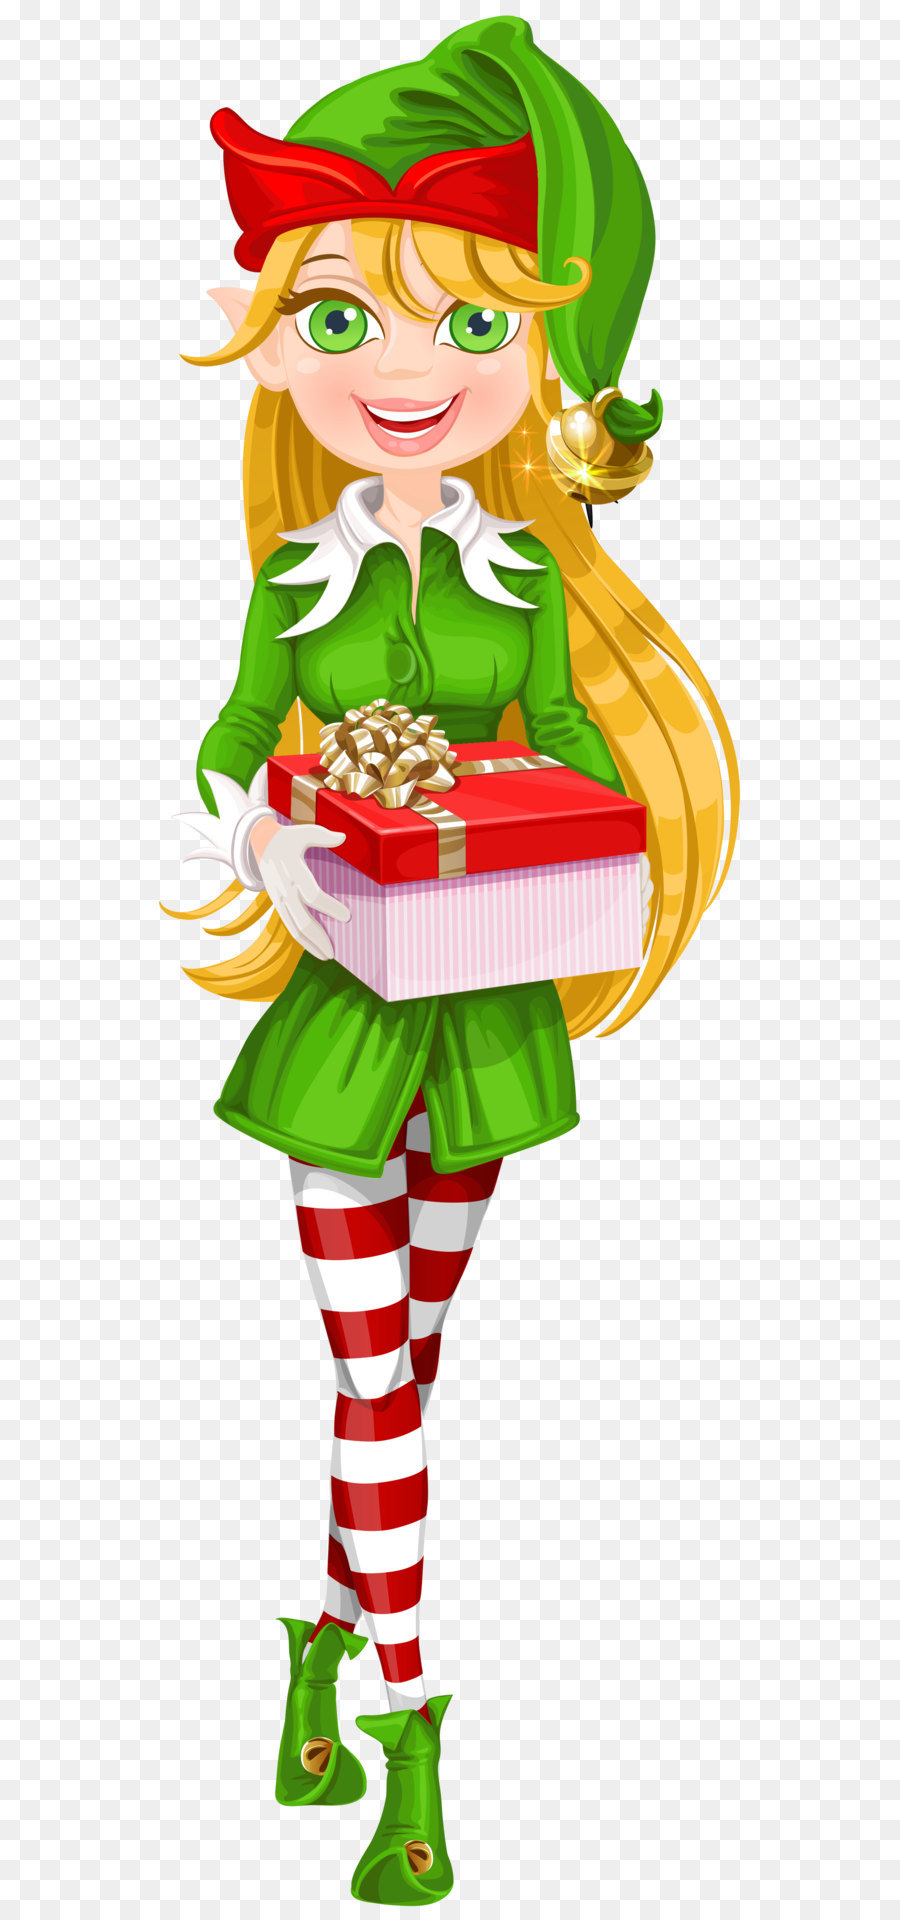 The Elf on the Shelf Santa Claus Christmas elf Clip art